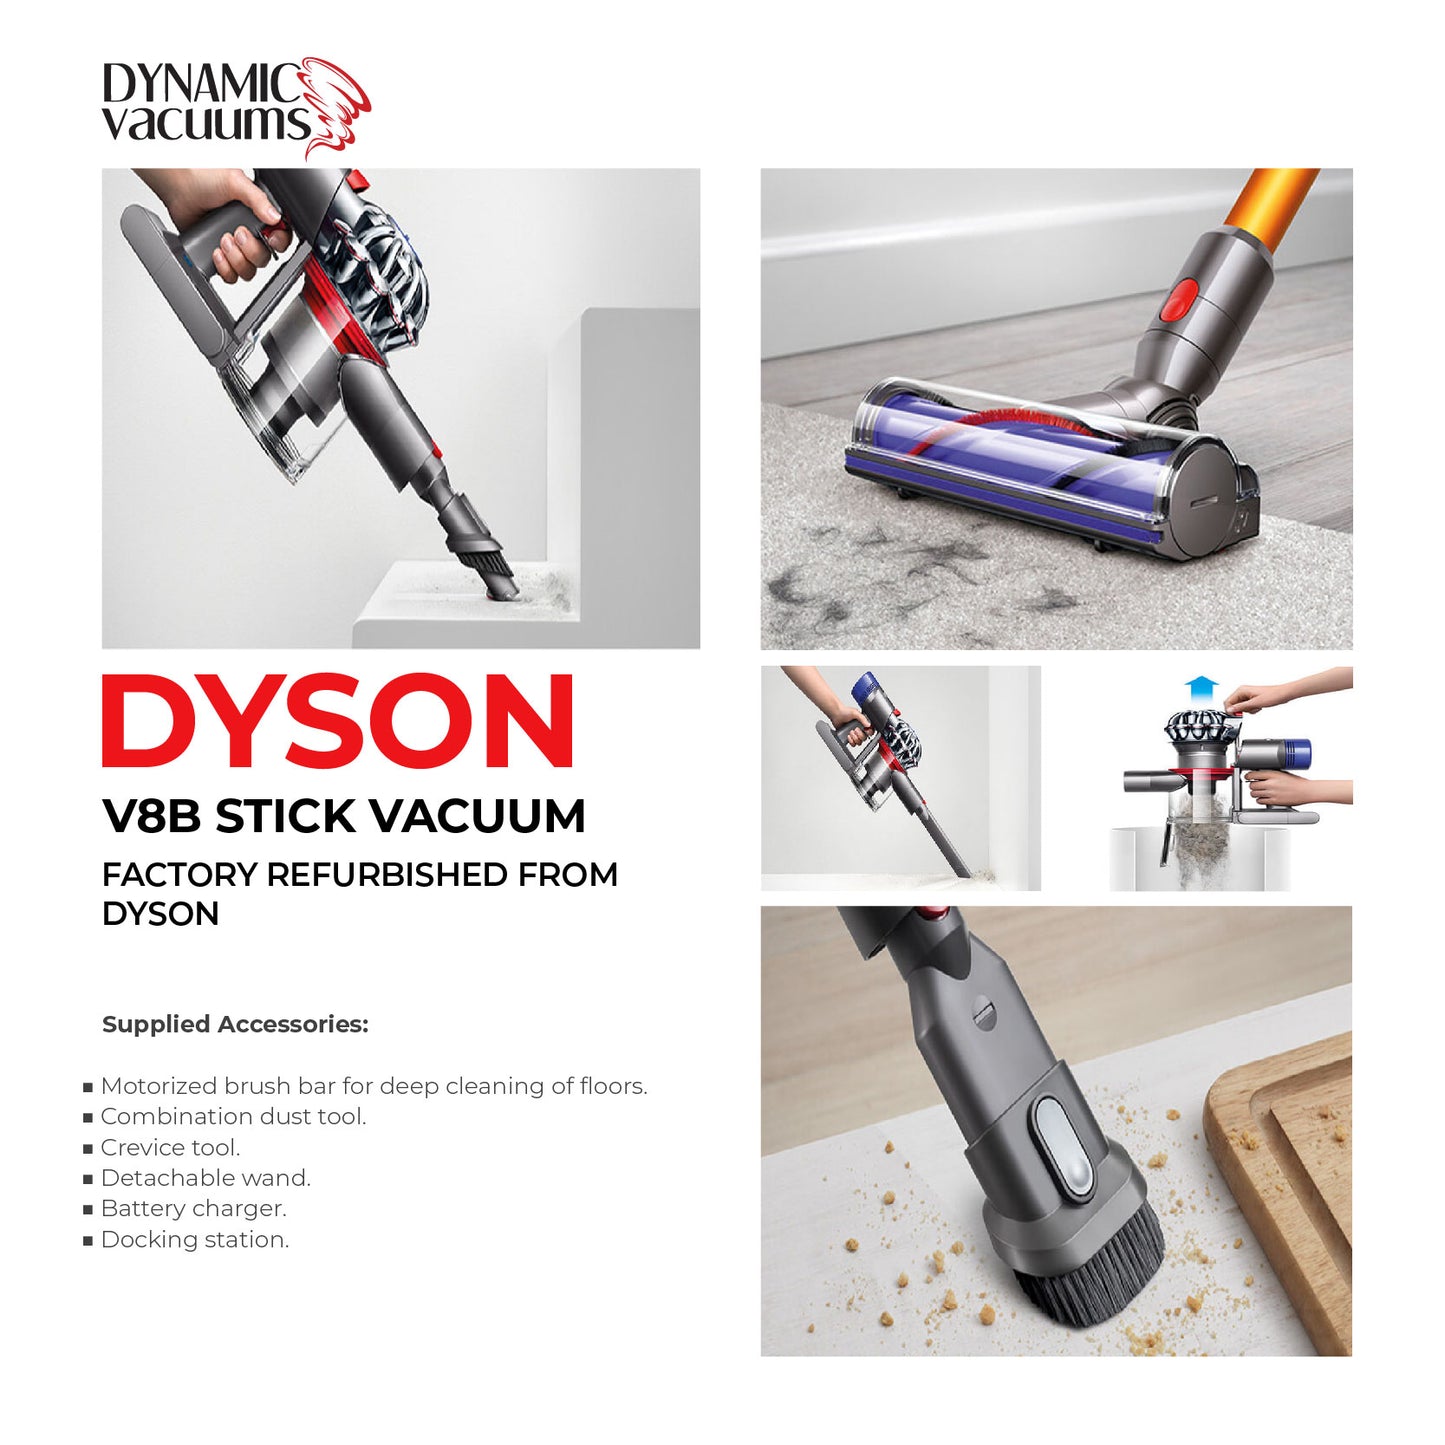 Dyson V8B Stick Vacuum - Factory Refurbished